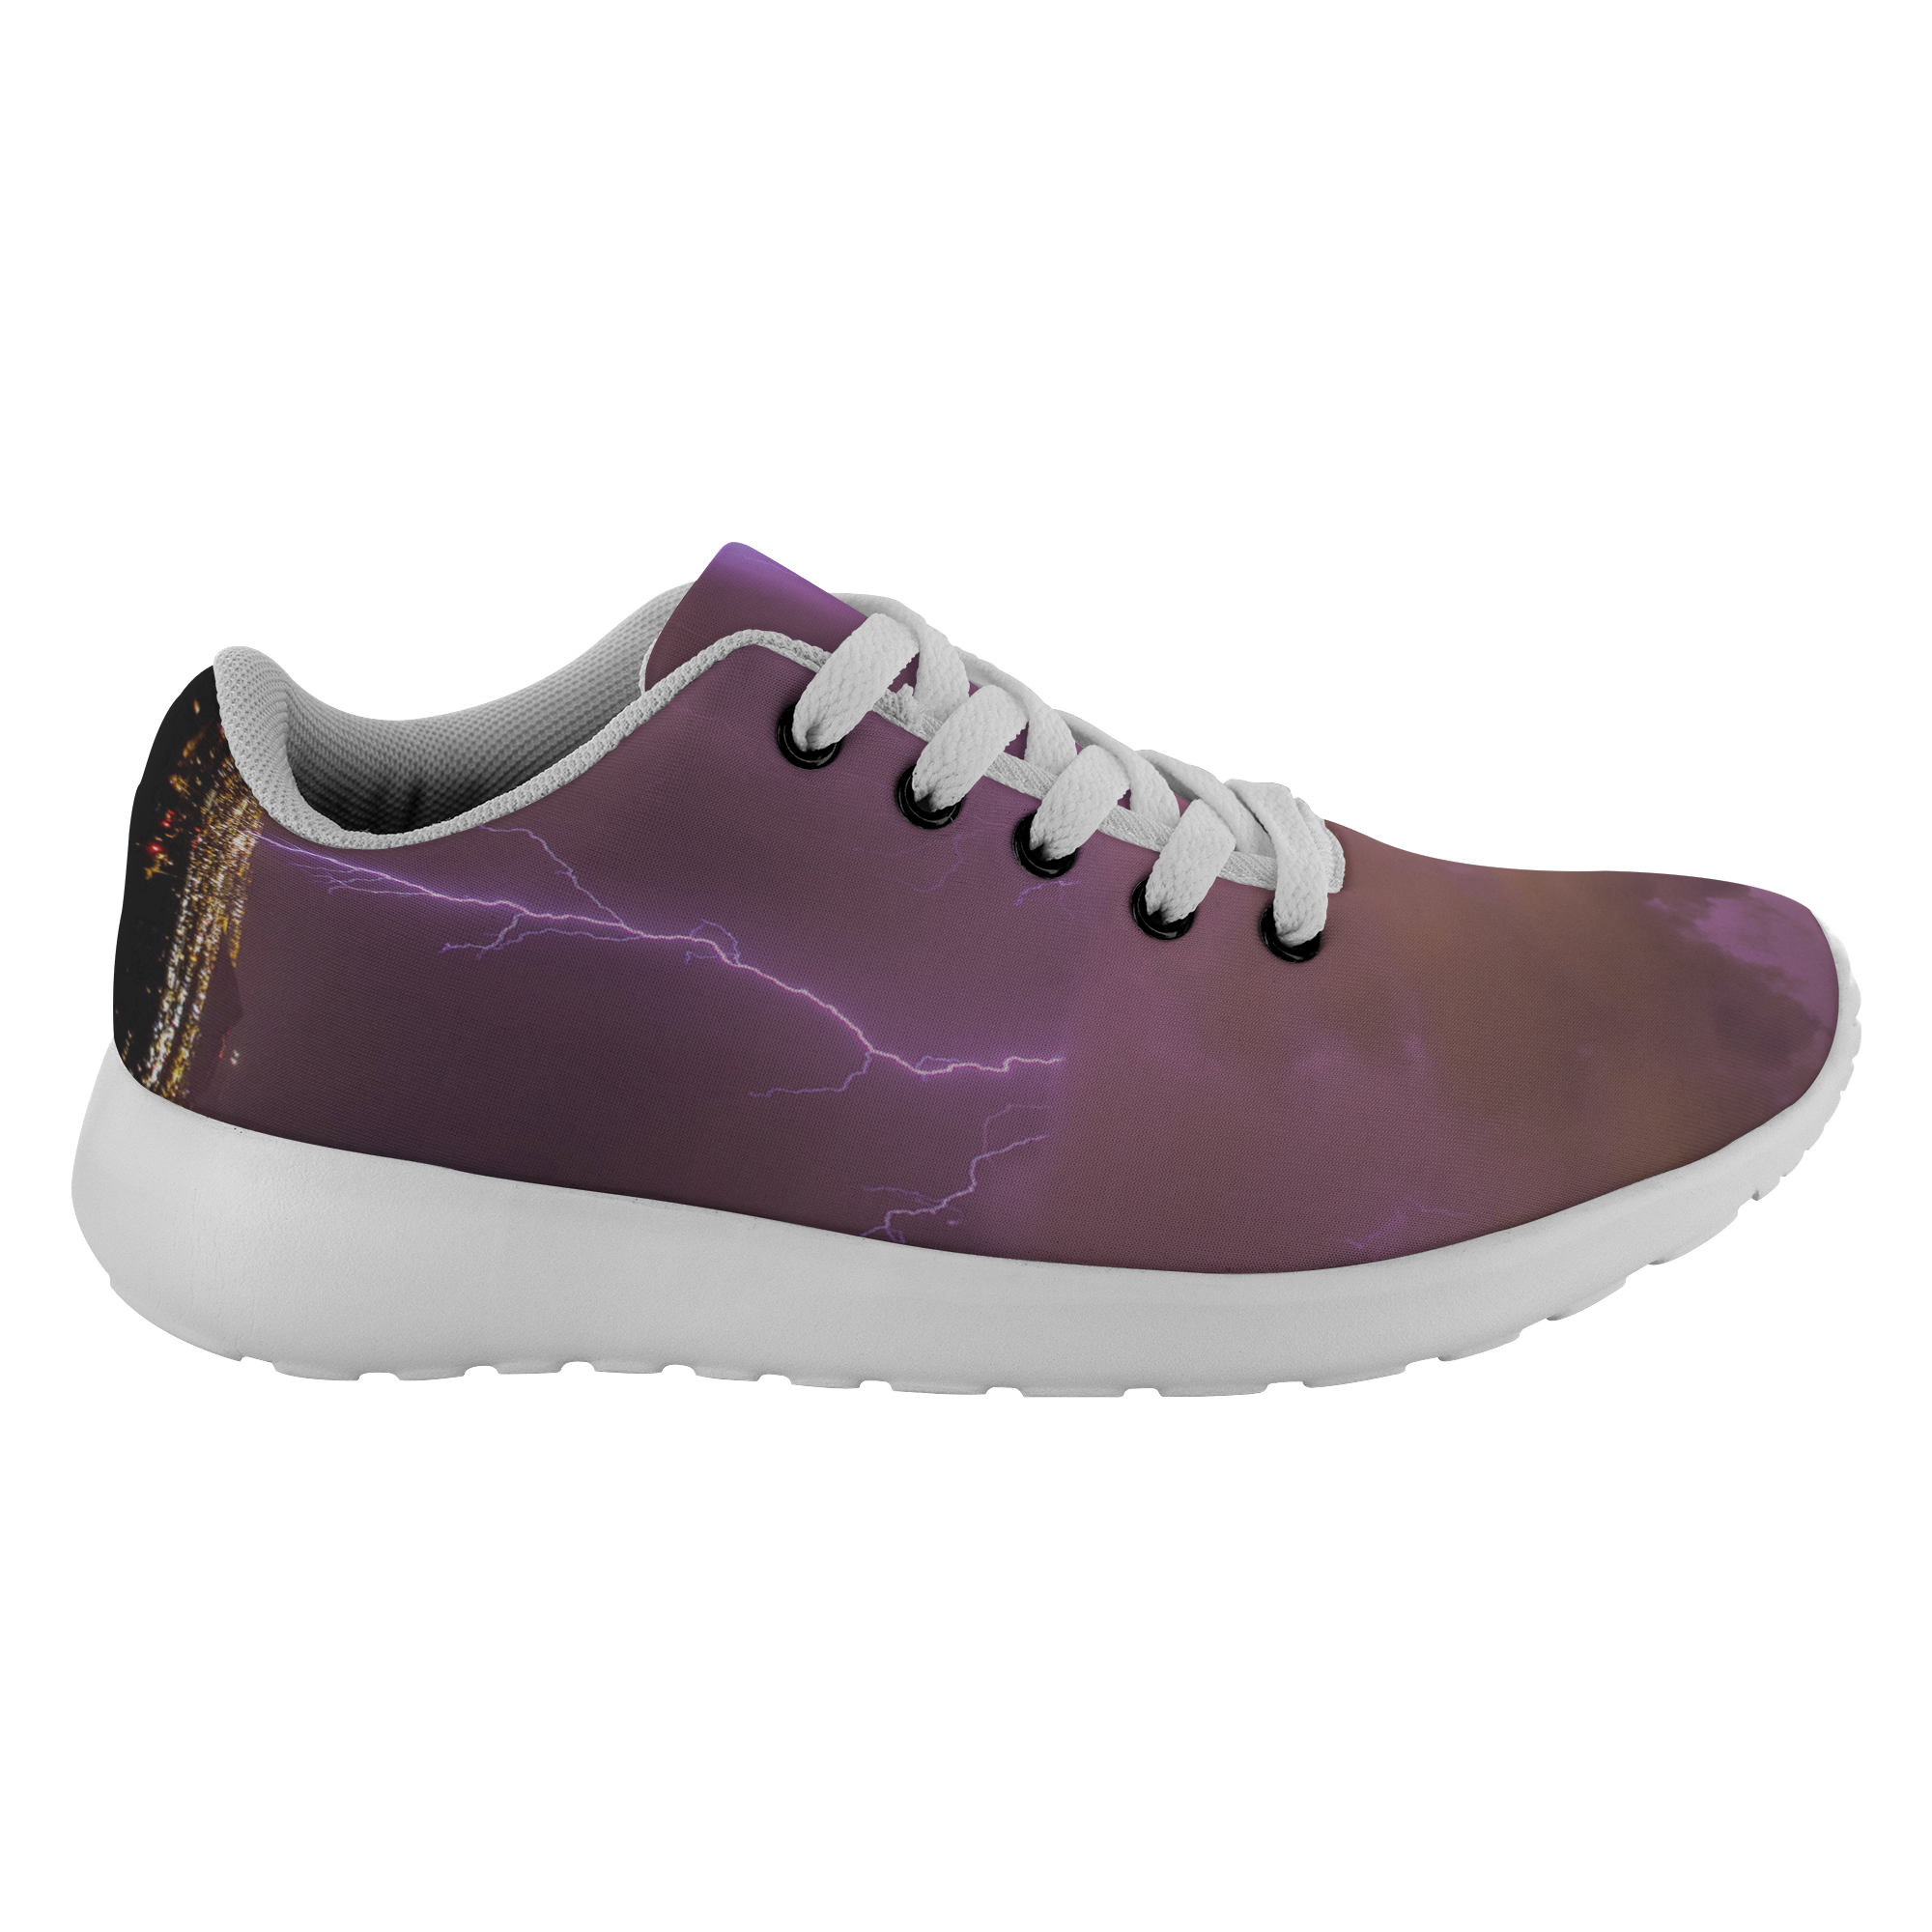 Lightning and sky shoes pod